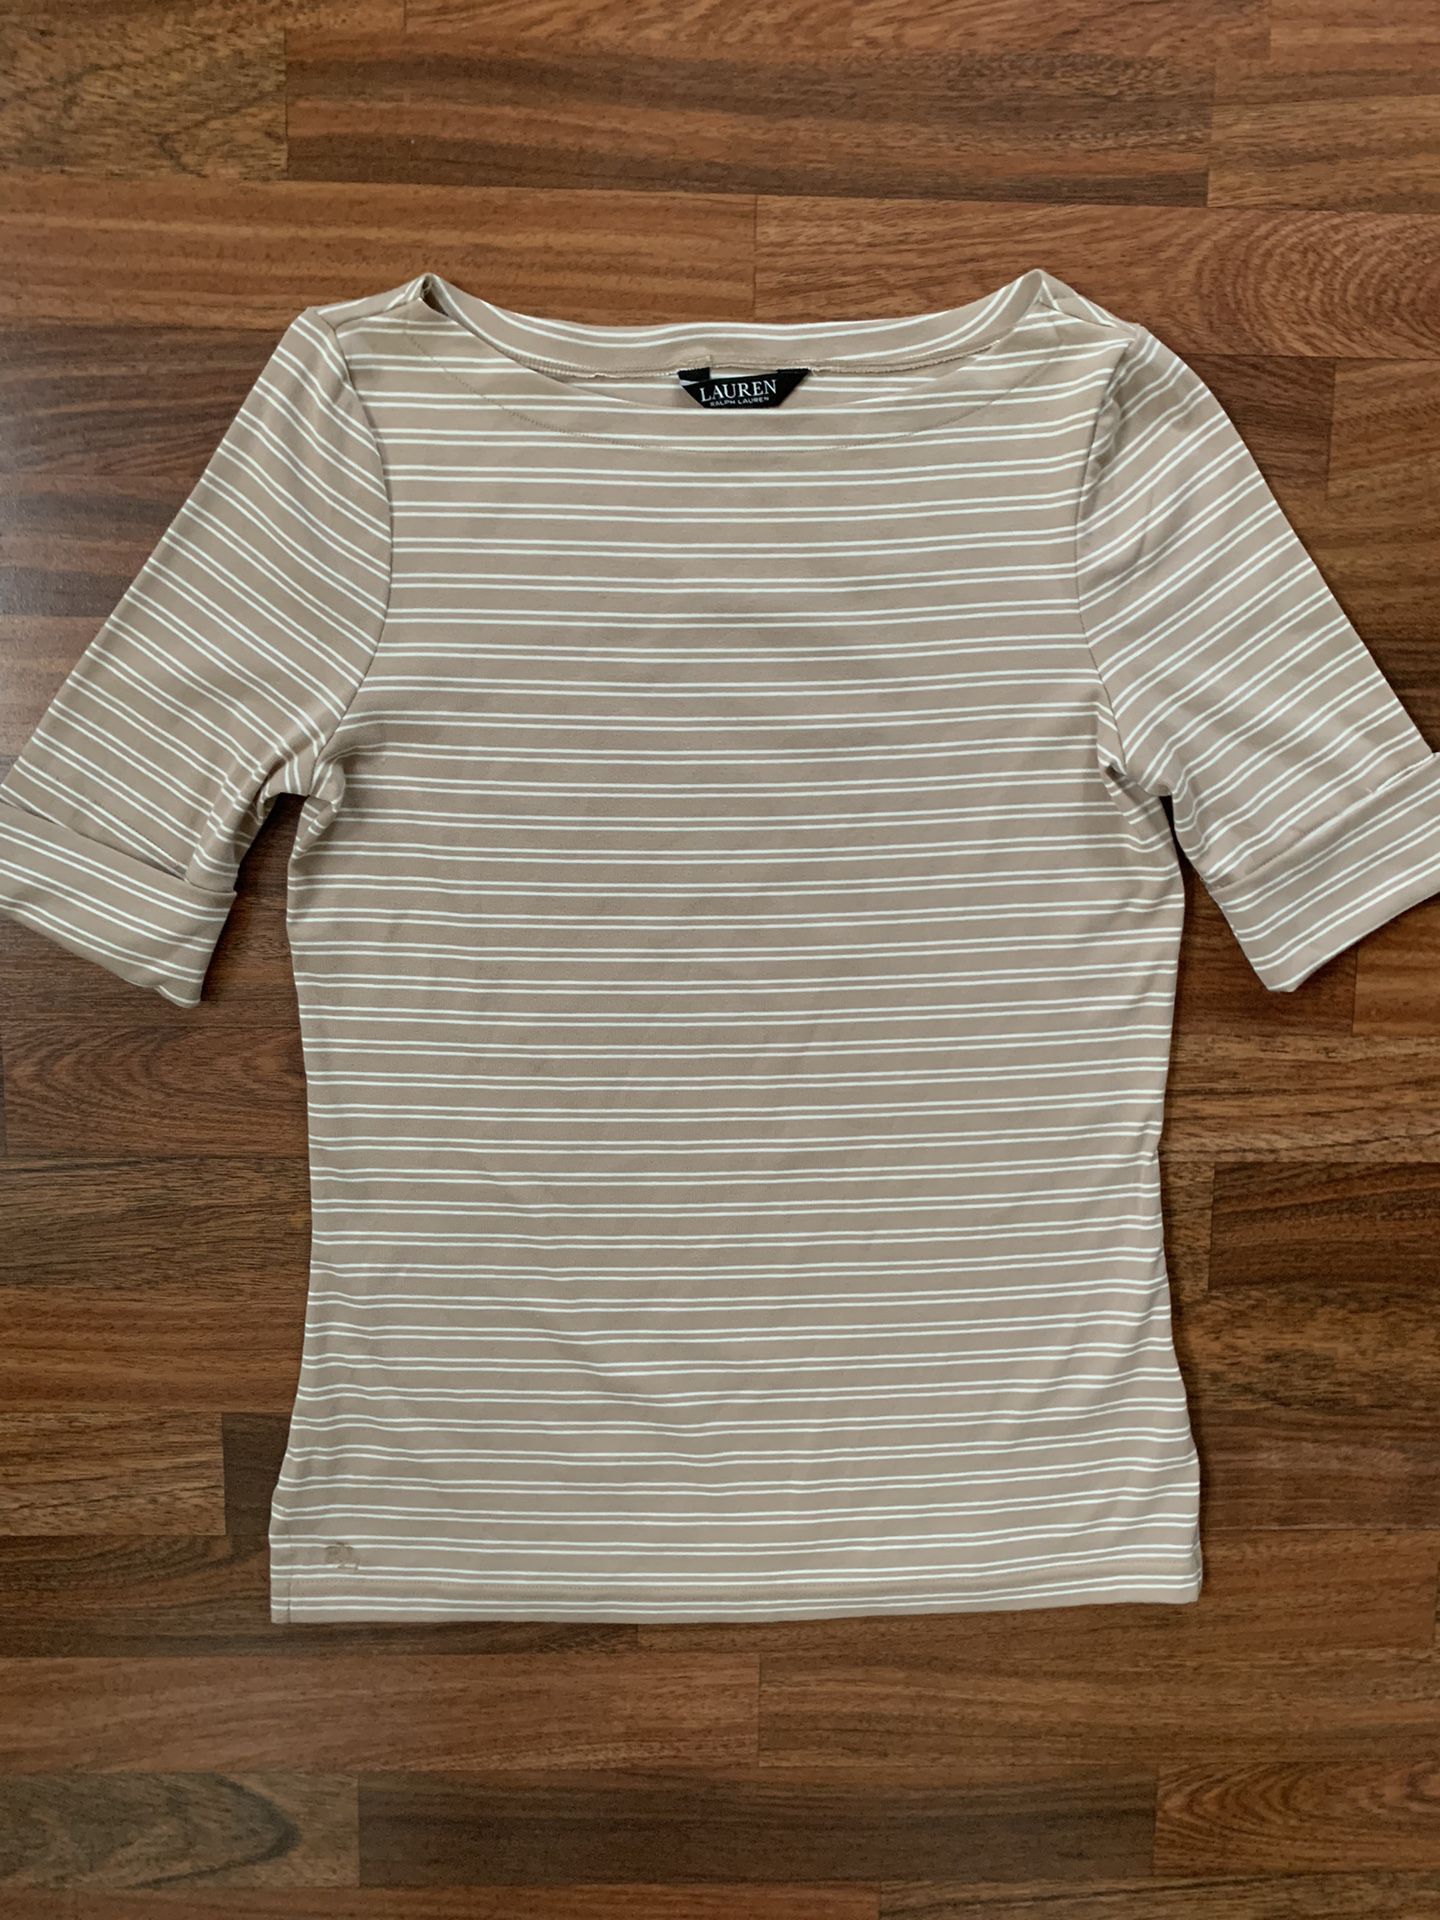 Lauren Ralph Lauren LRL Shirt Womens Medium Tan White Striped Preppy Academia